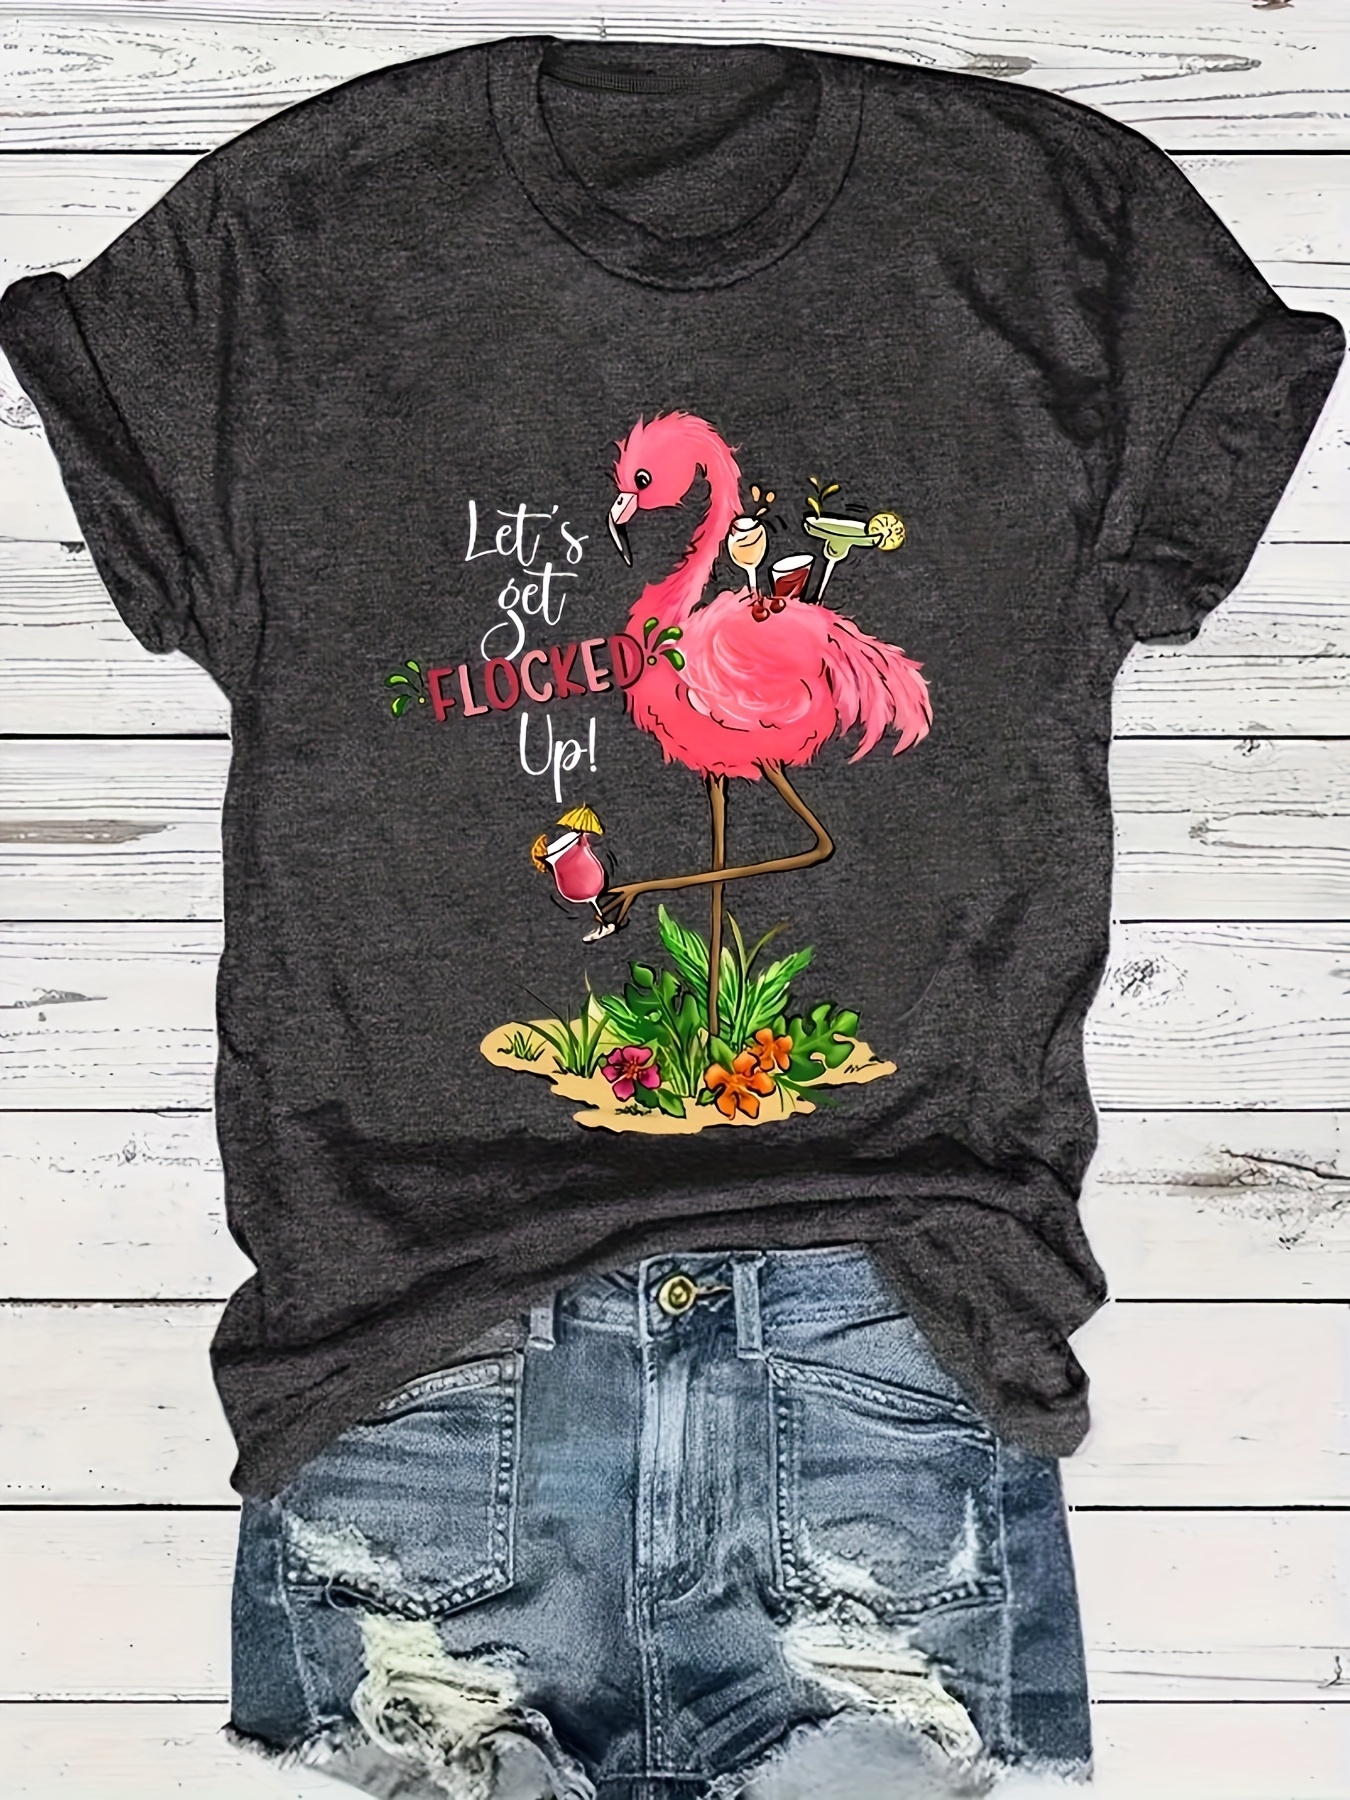 A New Summer Shirt - Here's My Flamingo Print Shirt